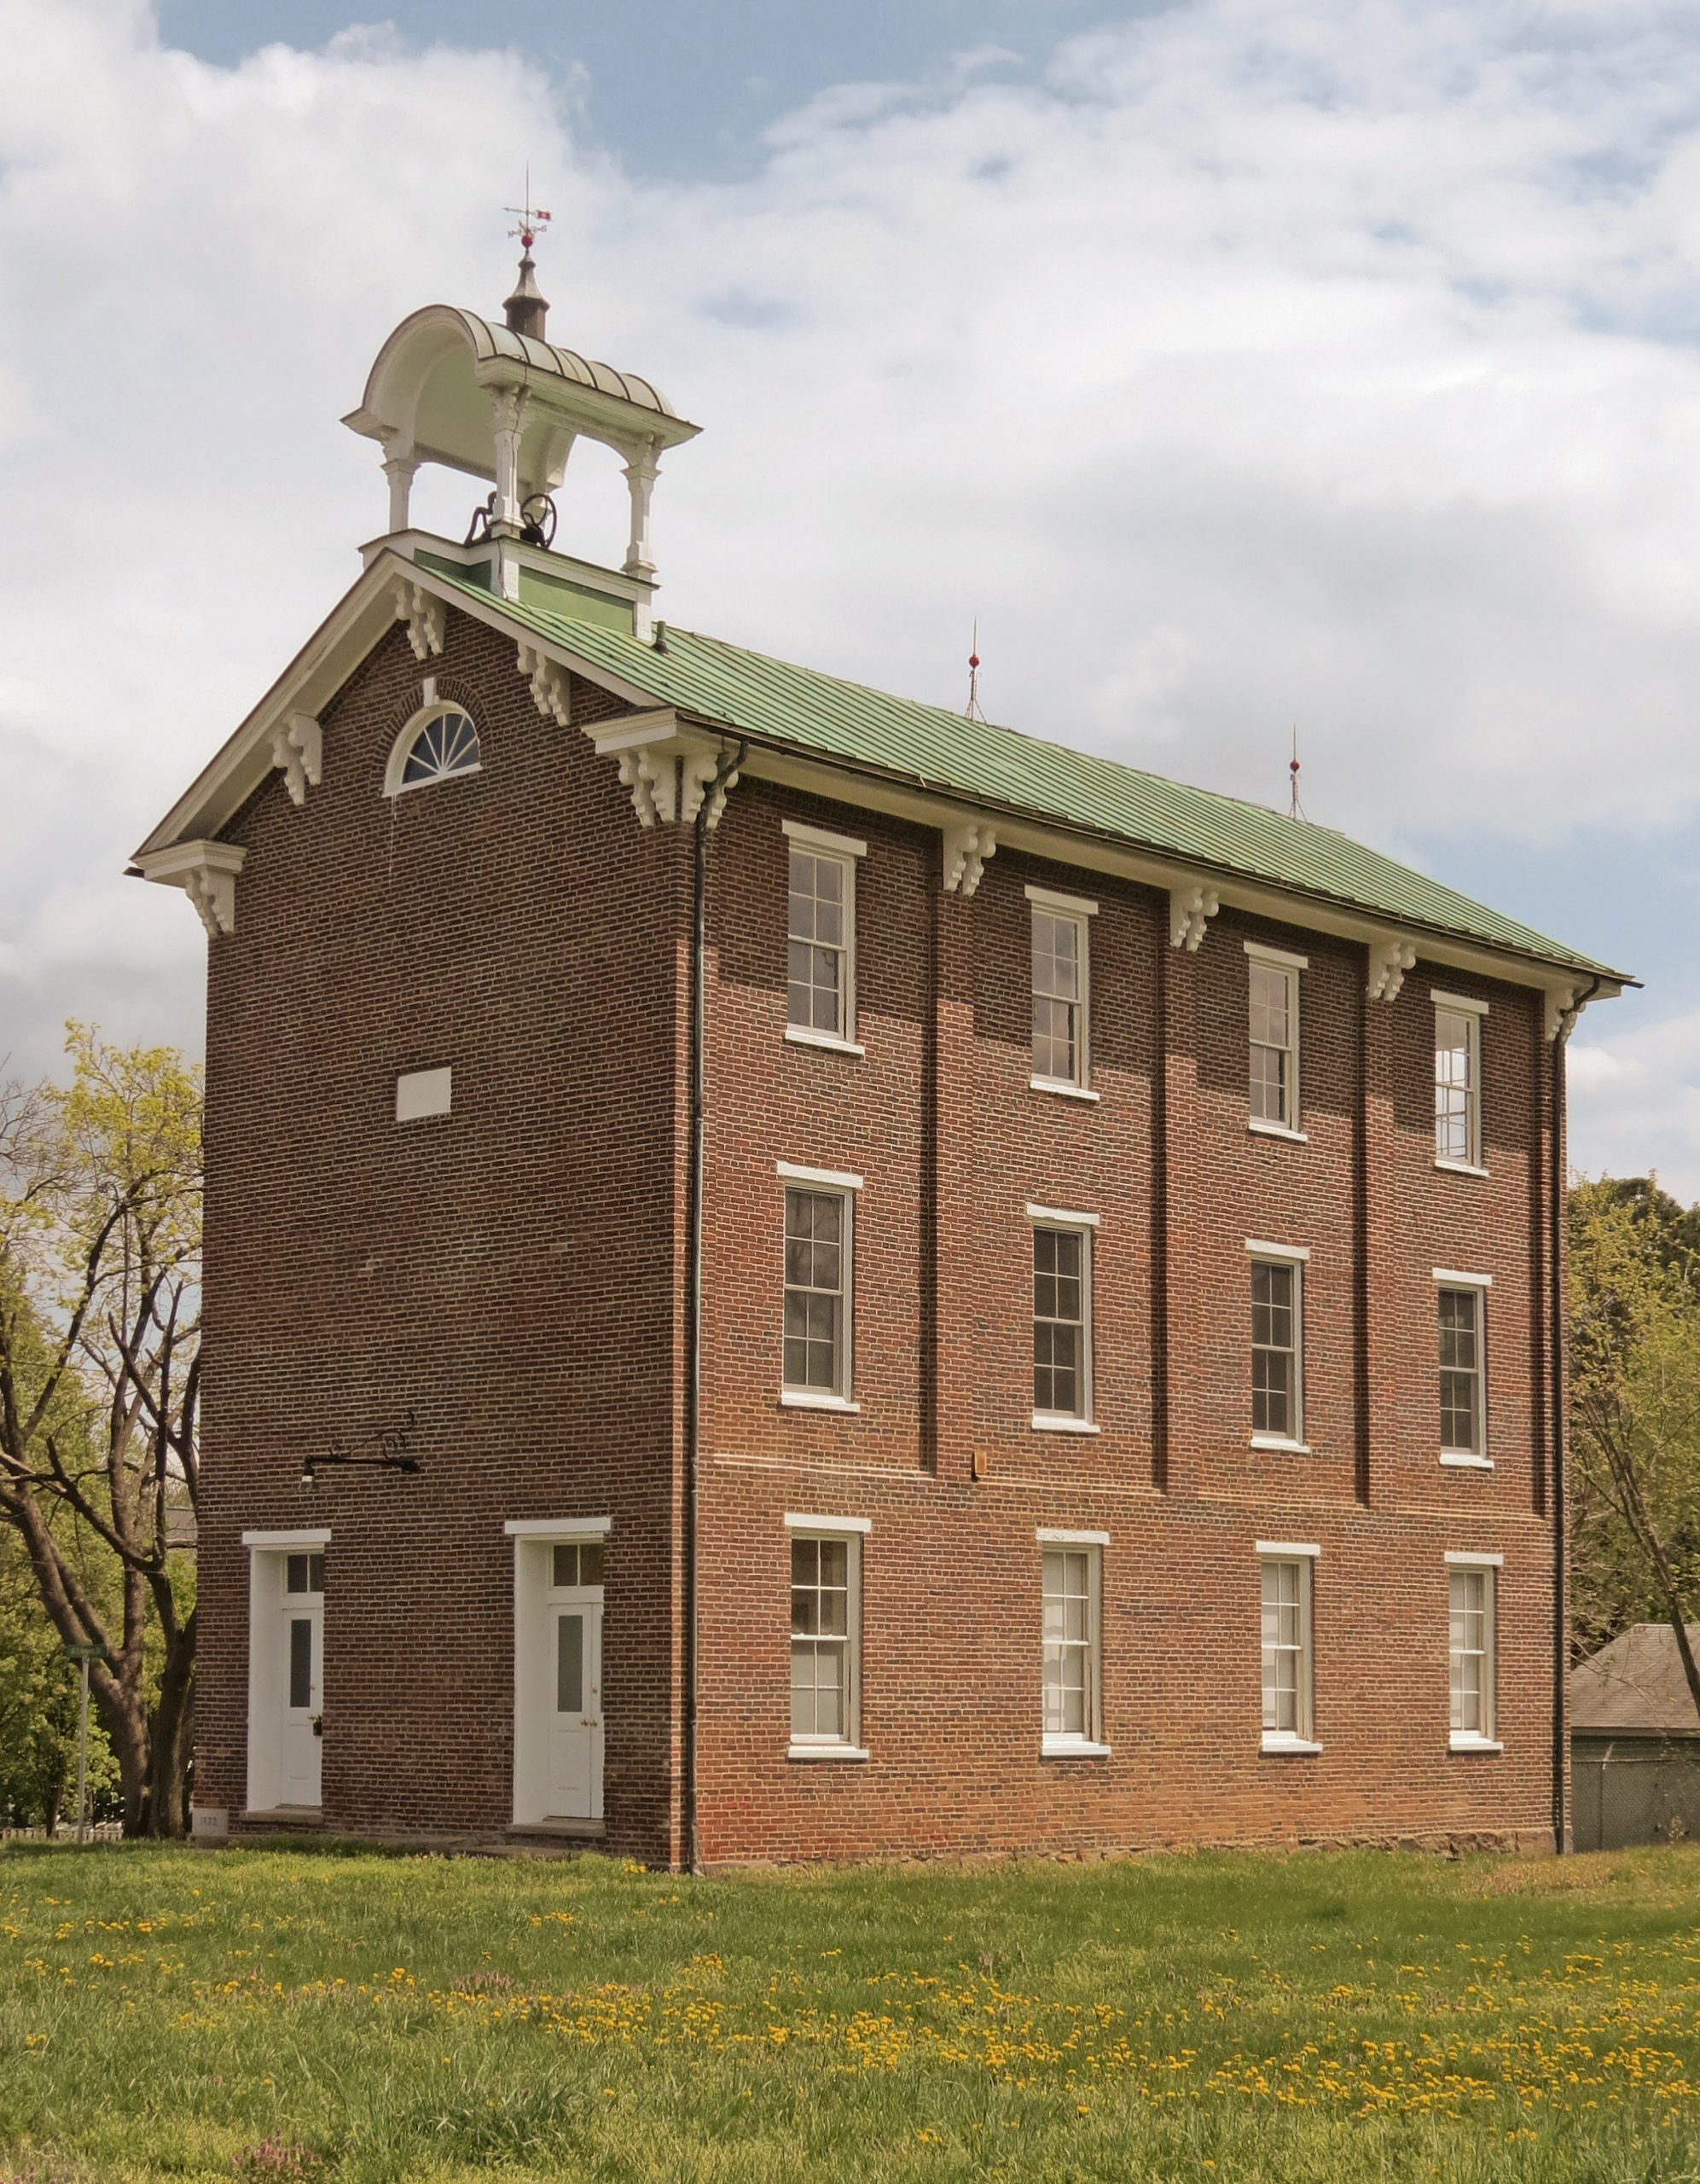 Hamilton Masonic Lodge